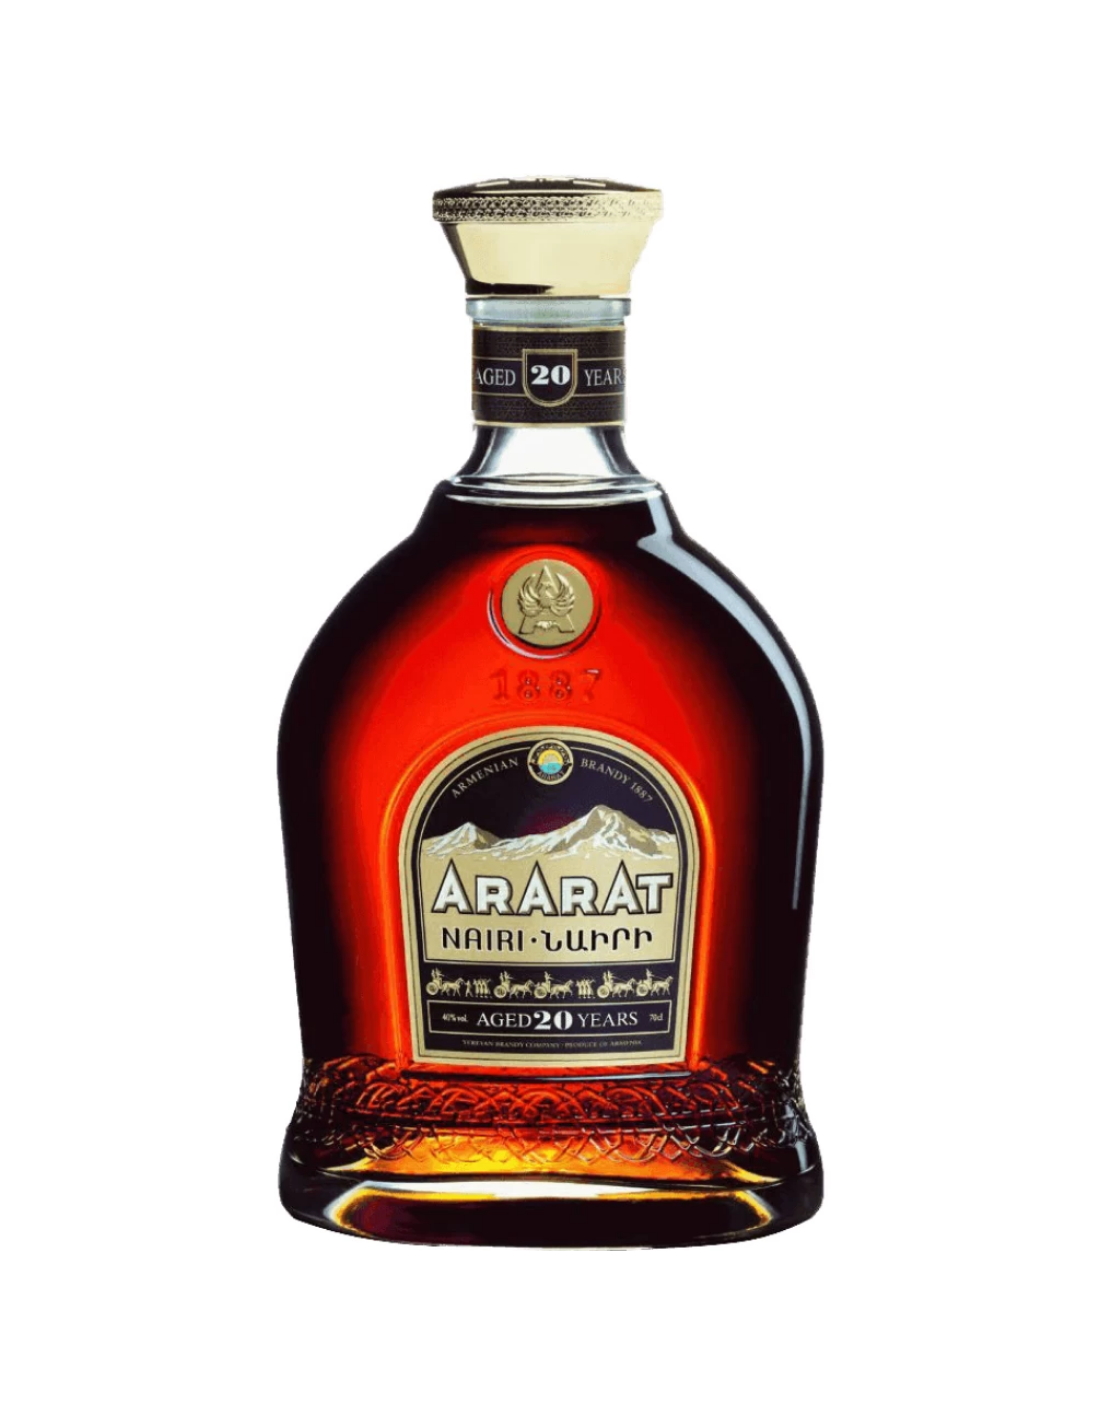 Brandy Ararat Nairi 20 Years, 40% alc., 0.7L, Armenia alcooldiscount.ro